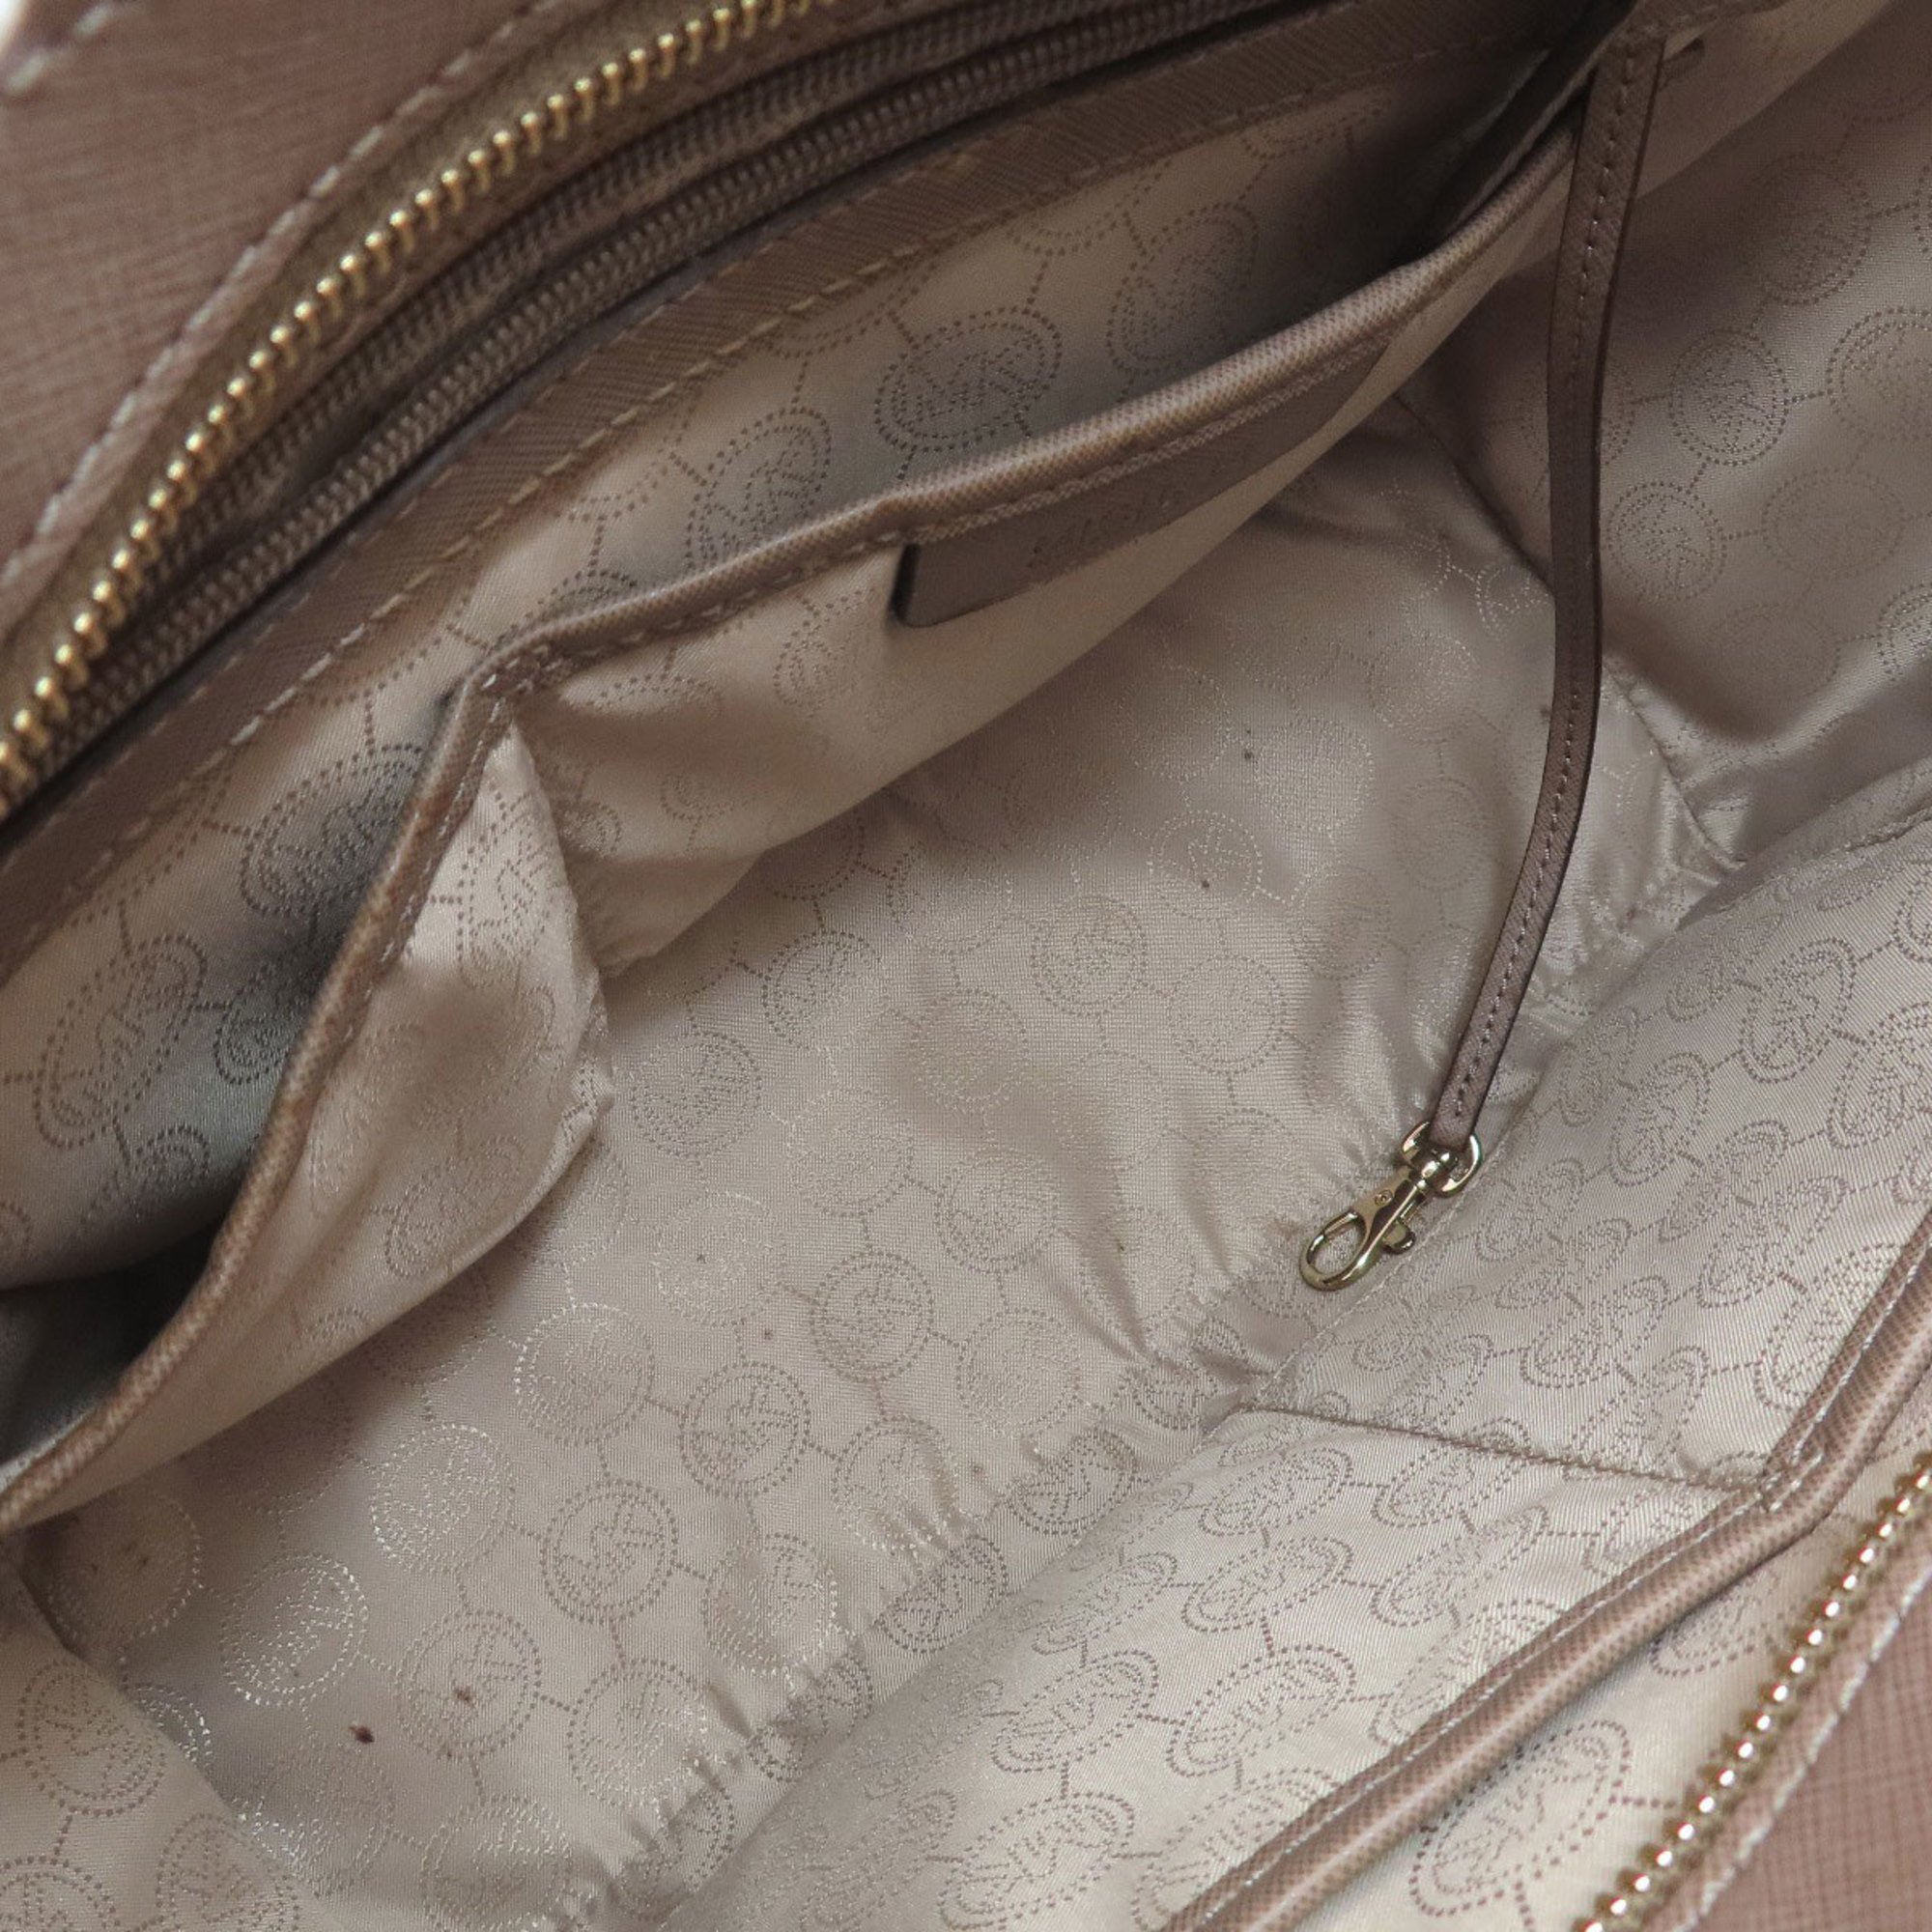 Michael Kors Studded Tote Bag for Women